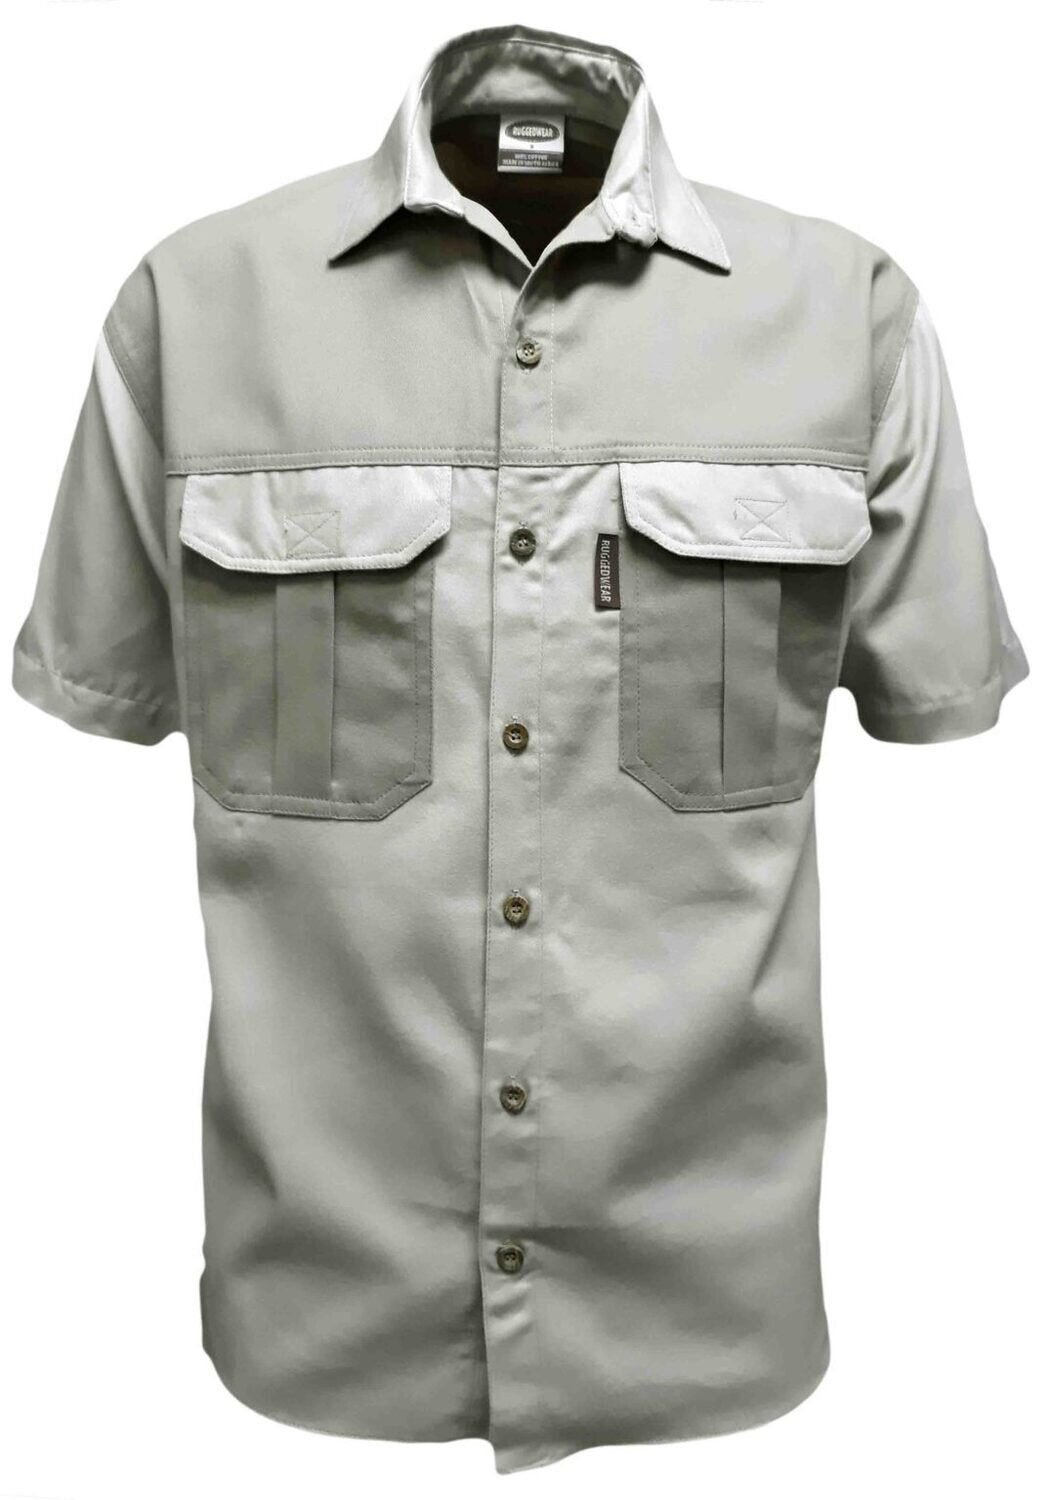 Ruggedwear Serengeti Two Tone Shirt